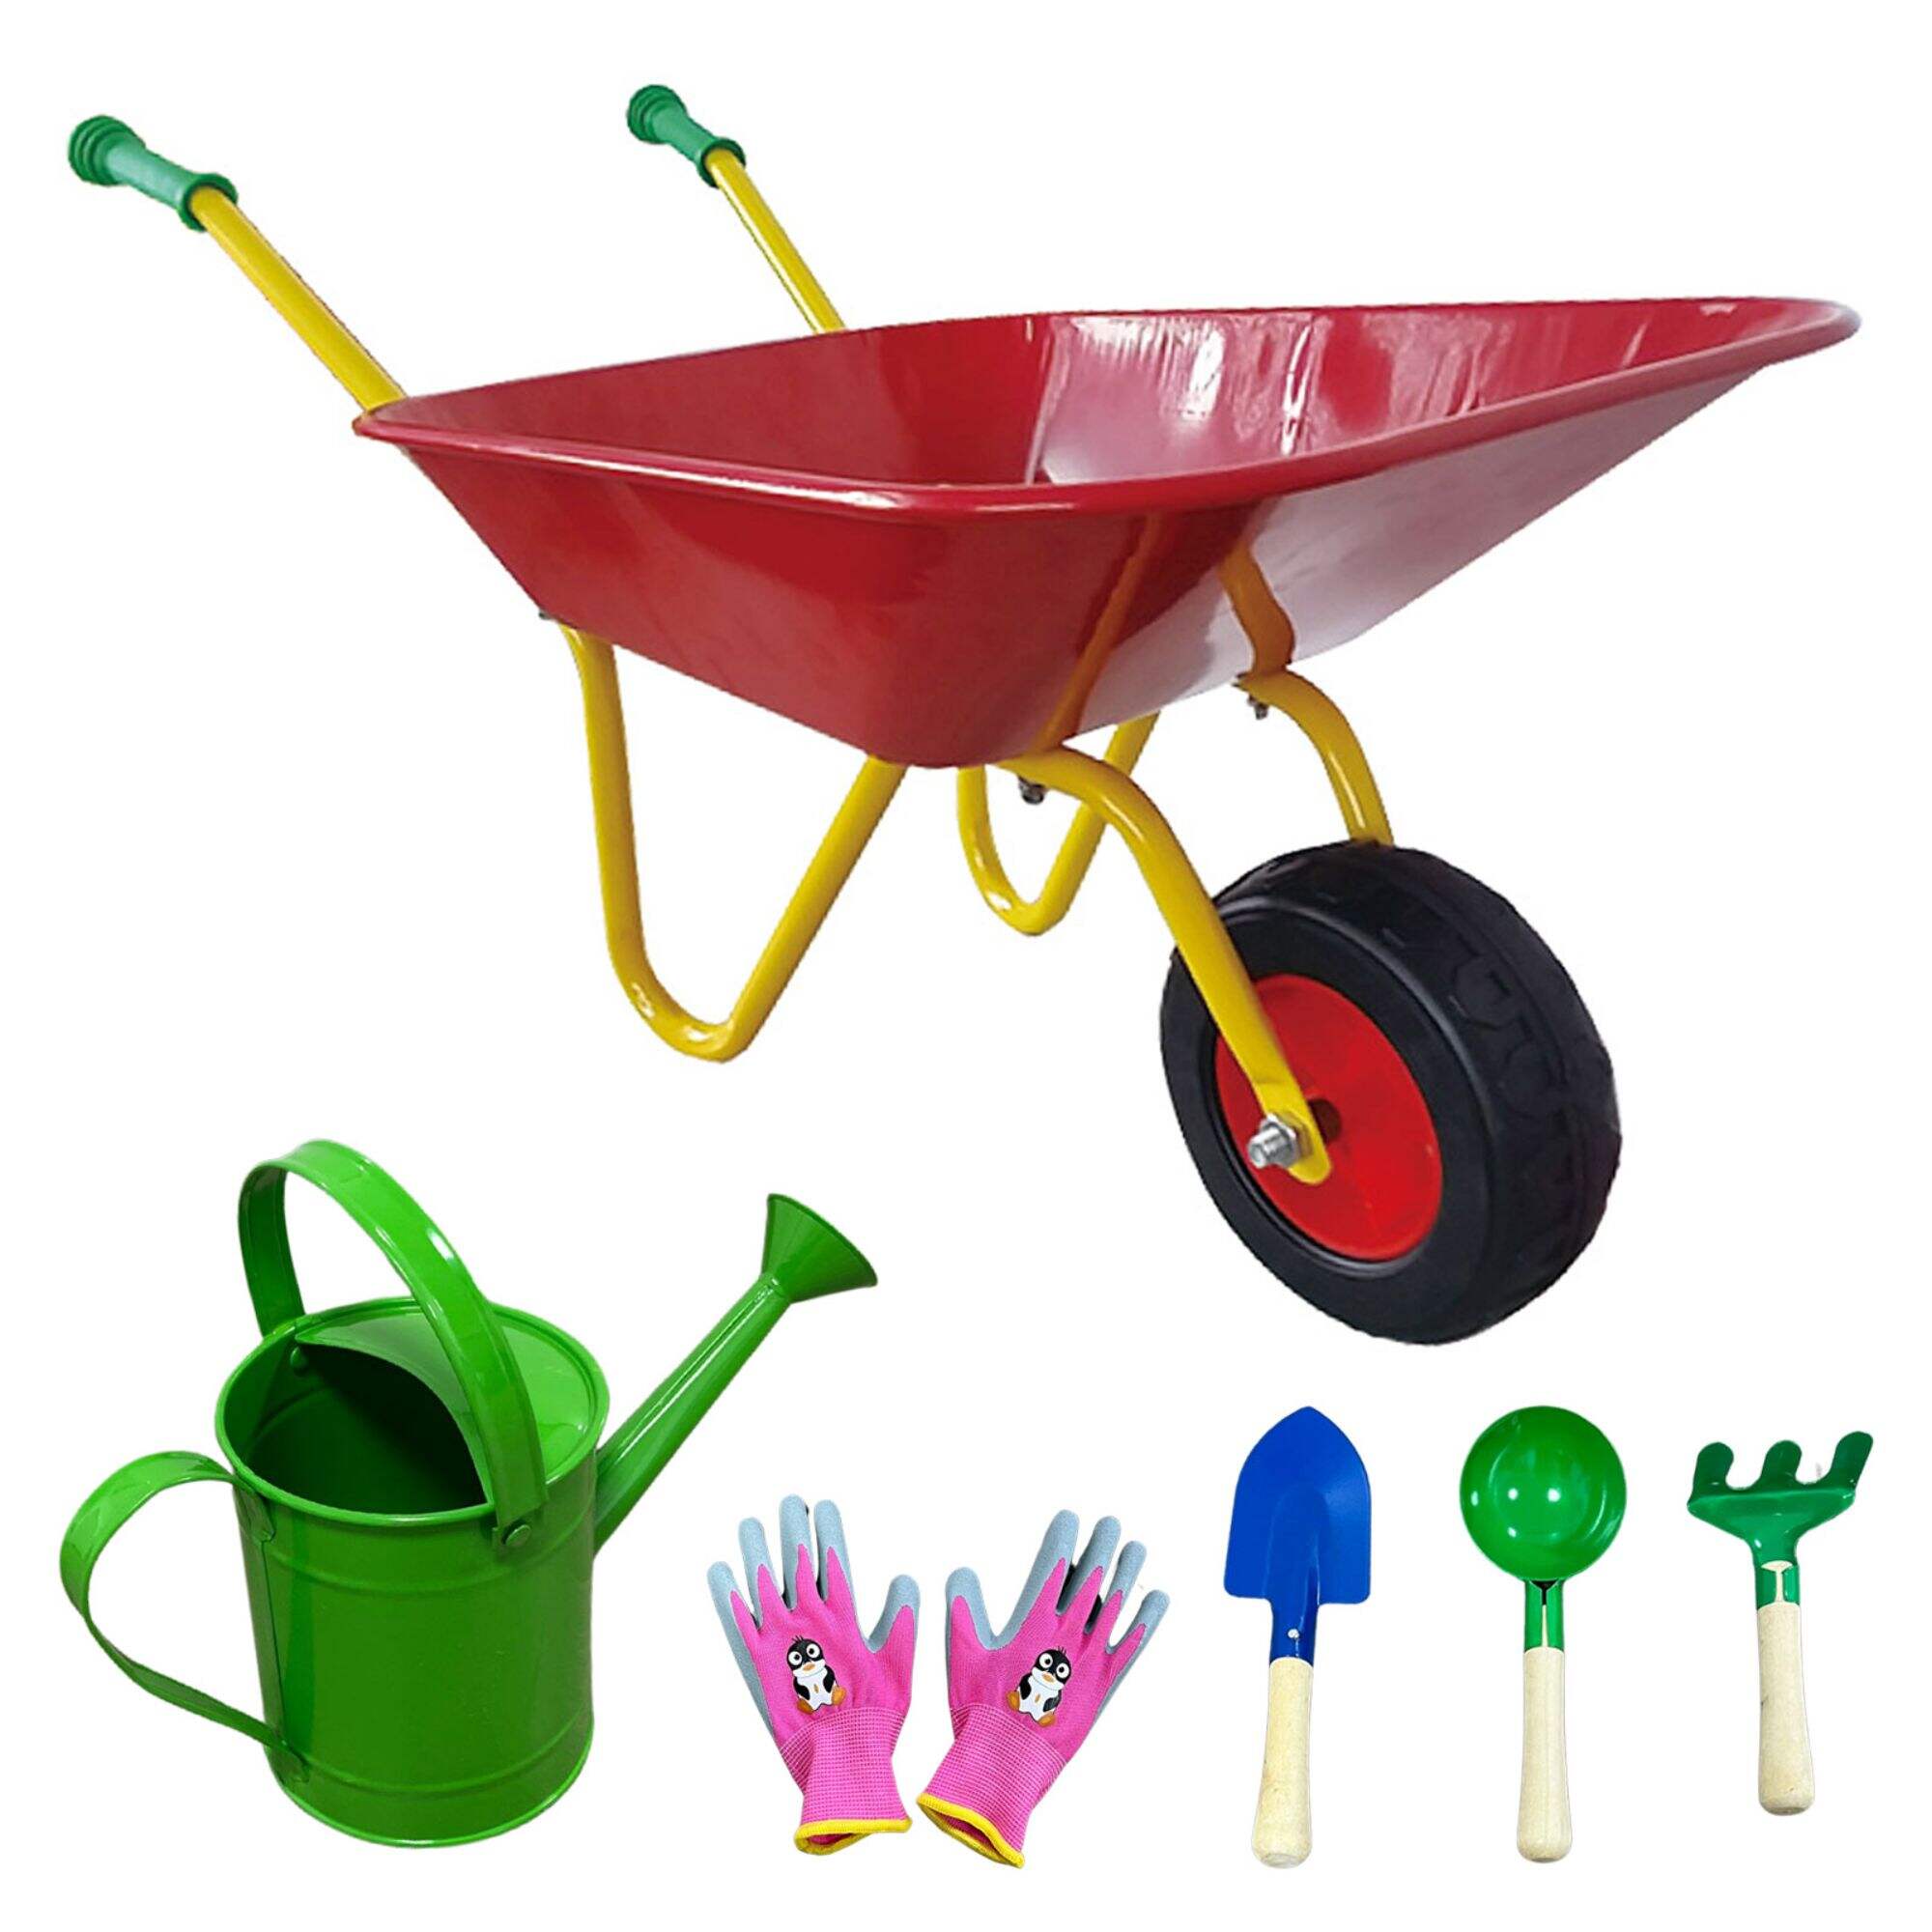 WB0102 Kid's Toy Wheelbarrow, Kids Gardening Tools with 6